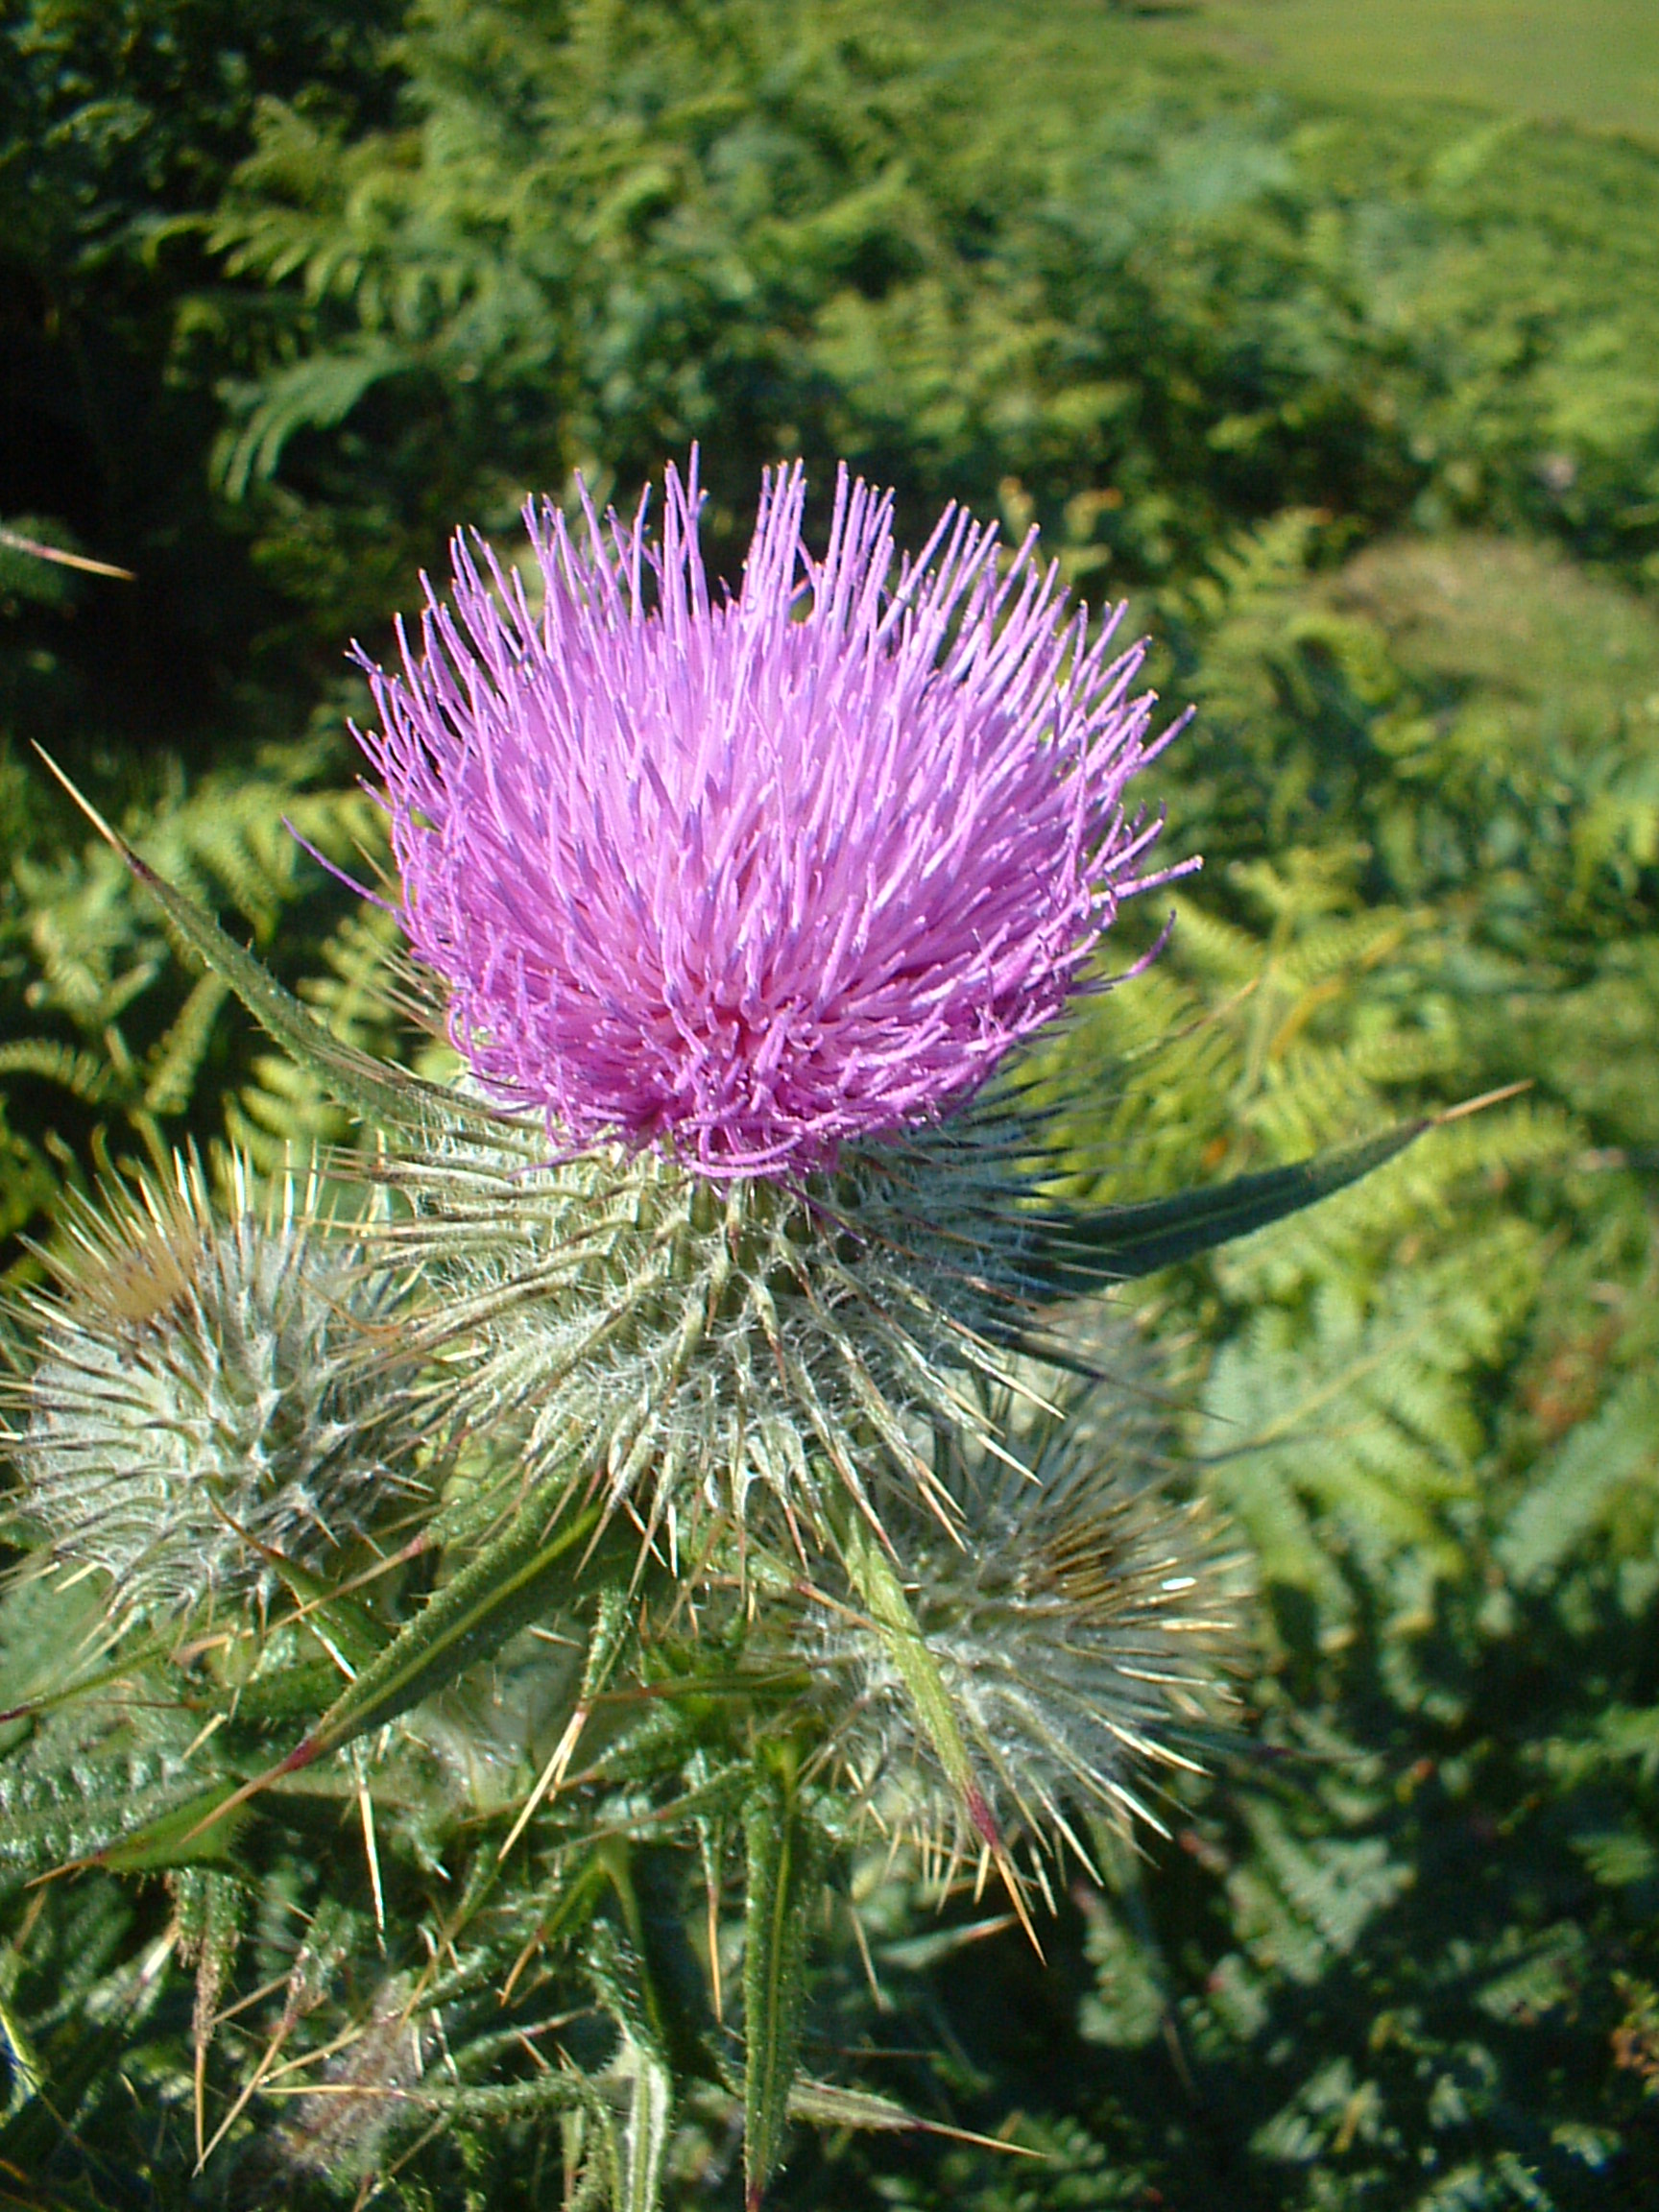 Wild Scotland wildlife and adventure tourism | Plants and Habitats ...